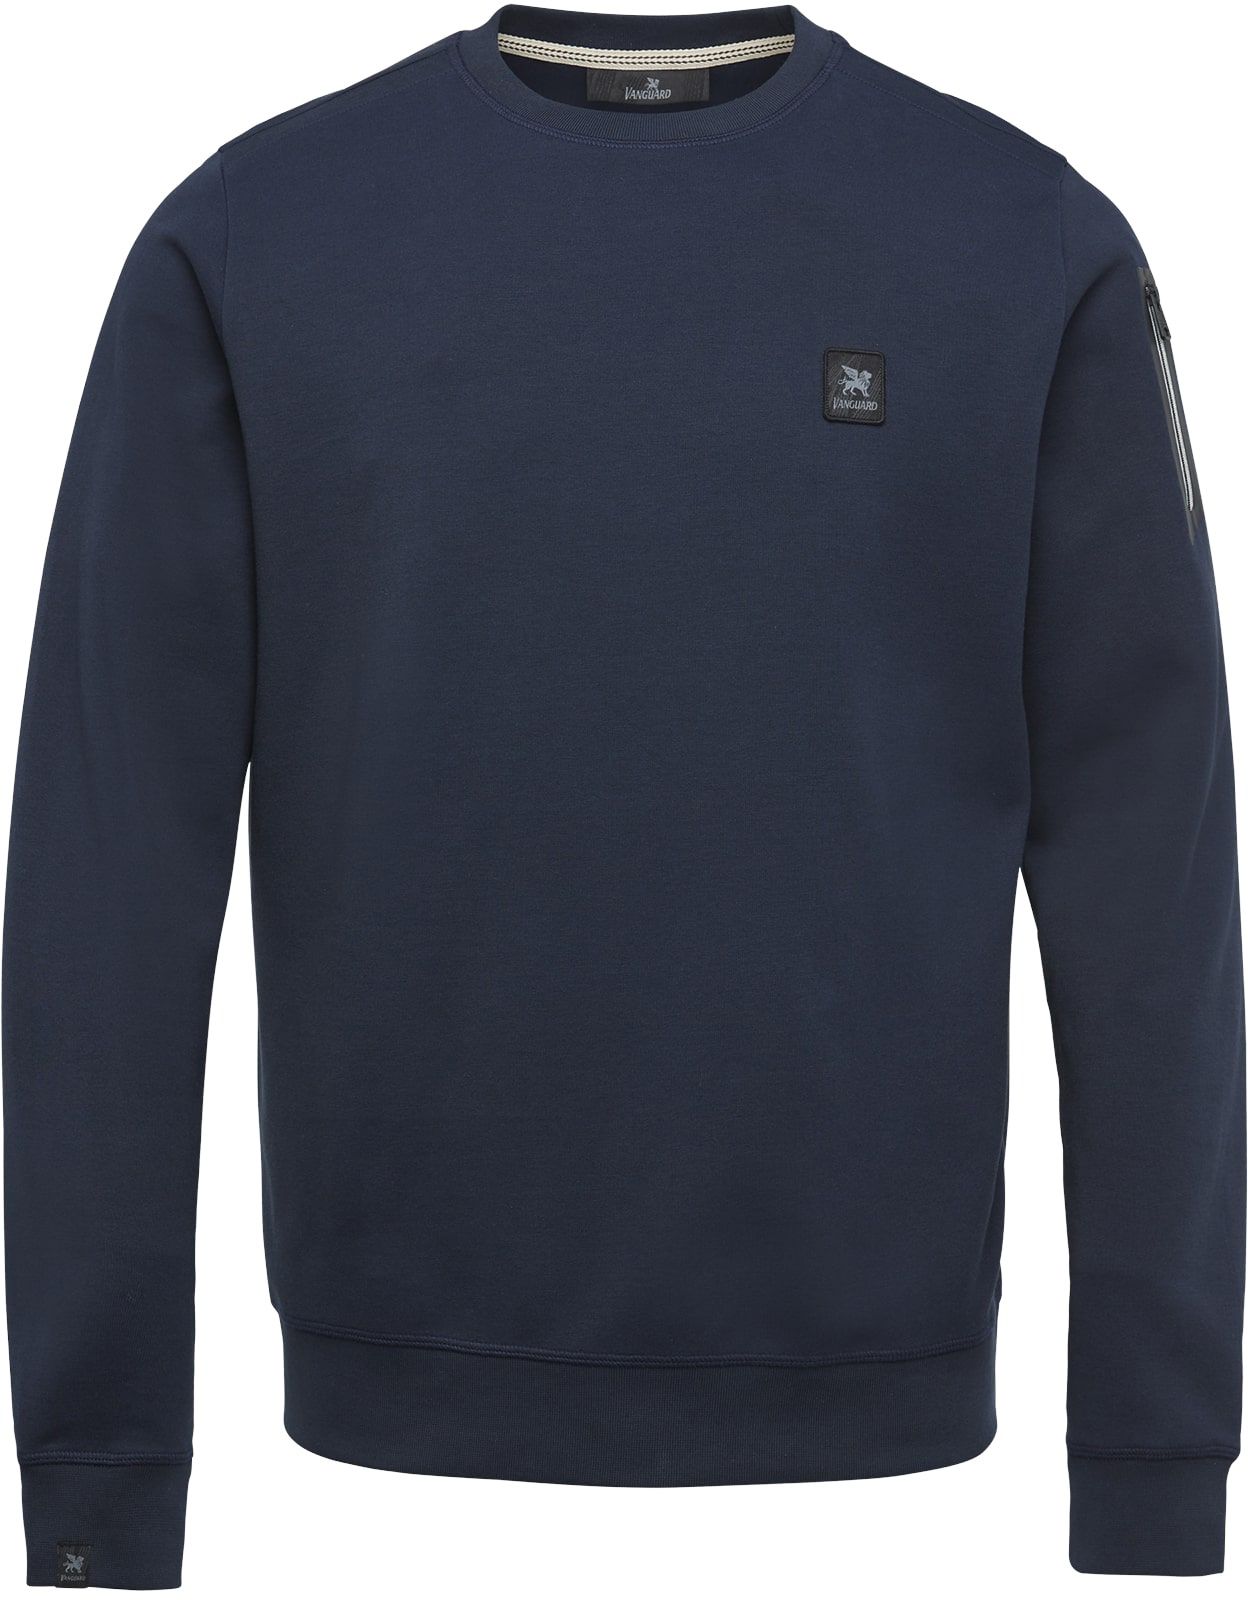 Vanguard Sweater Dark Blue Dark Blue size L